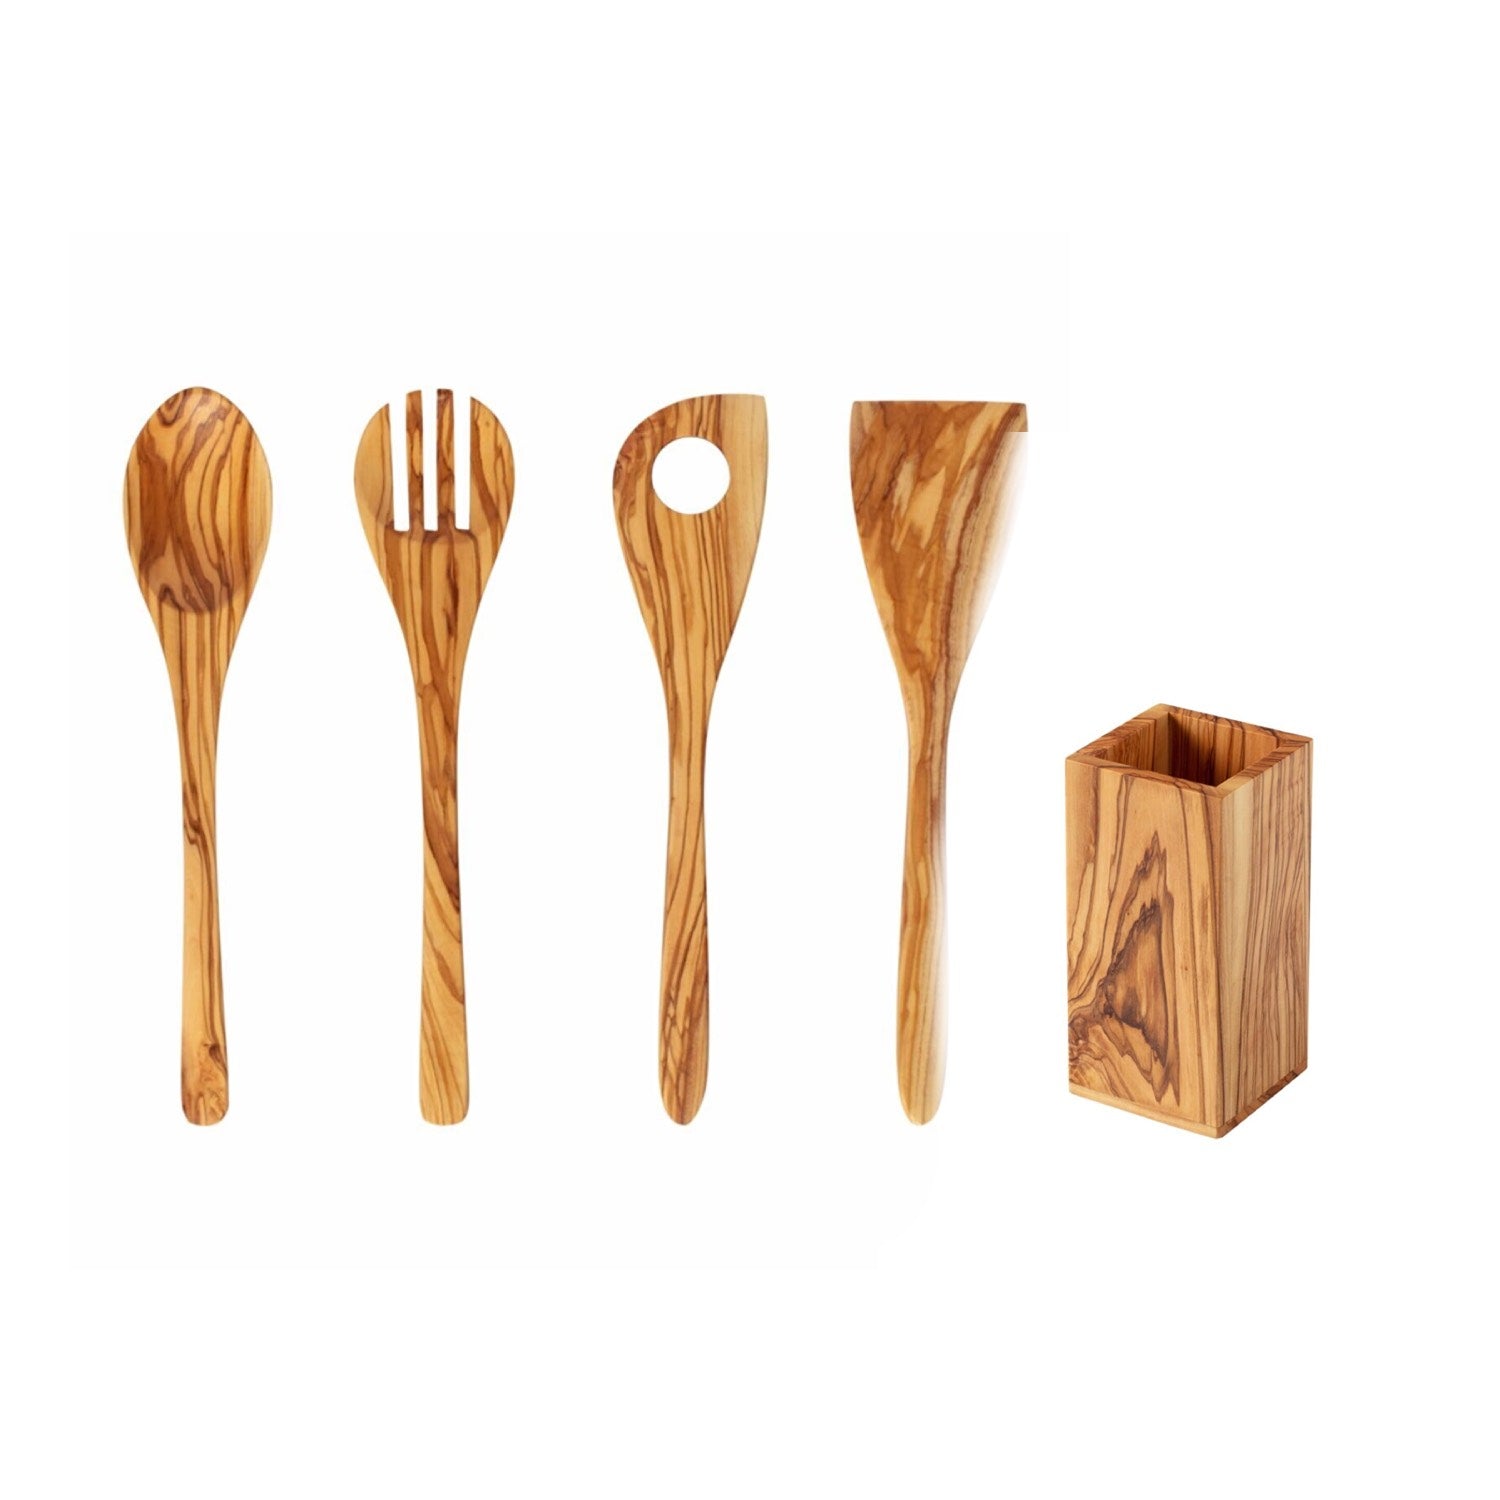 Olive Wood Kitchen Utensils Set for Cooking (4-Piece Set) - Forest